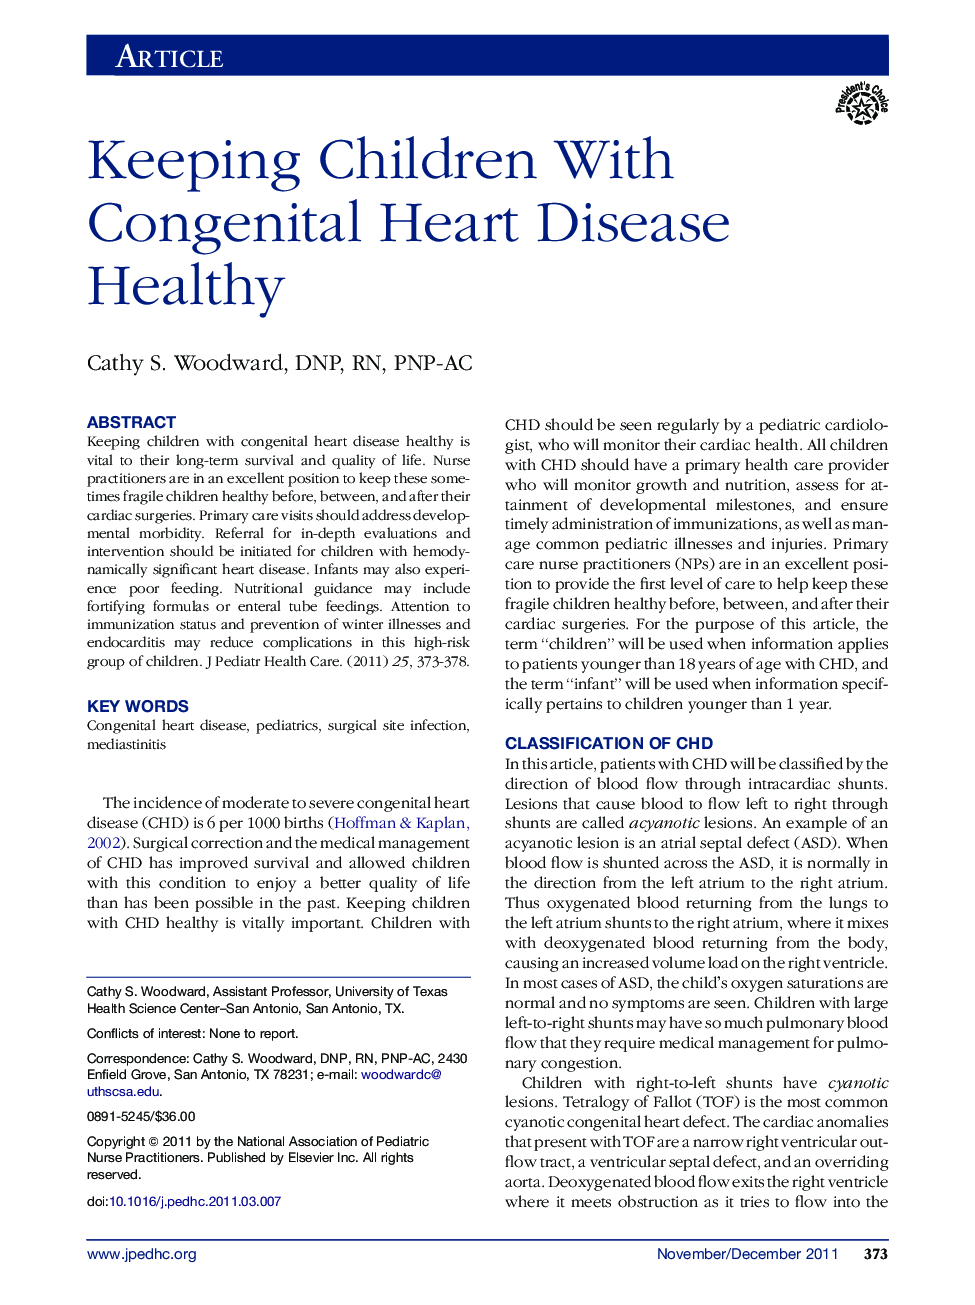 Keeping Children With Congenital Heart Disease Healthy